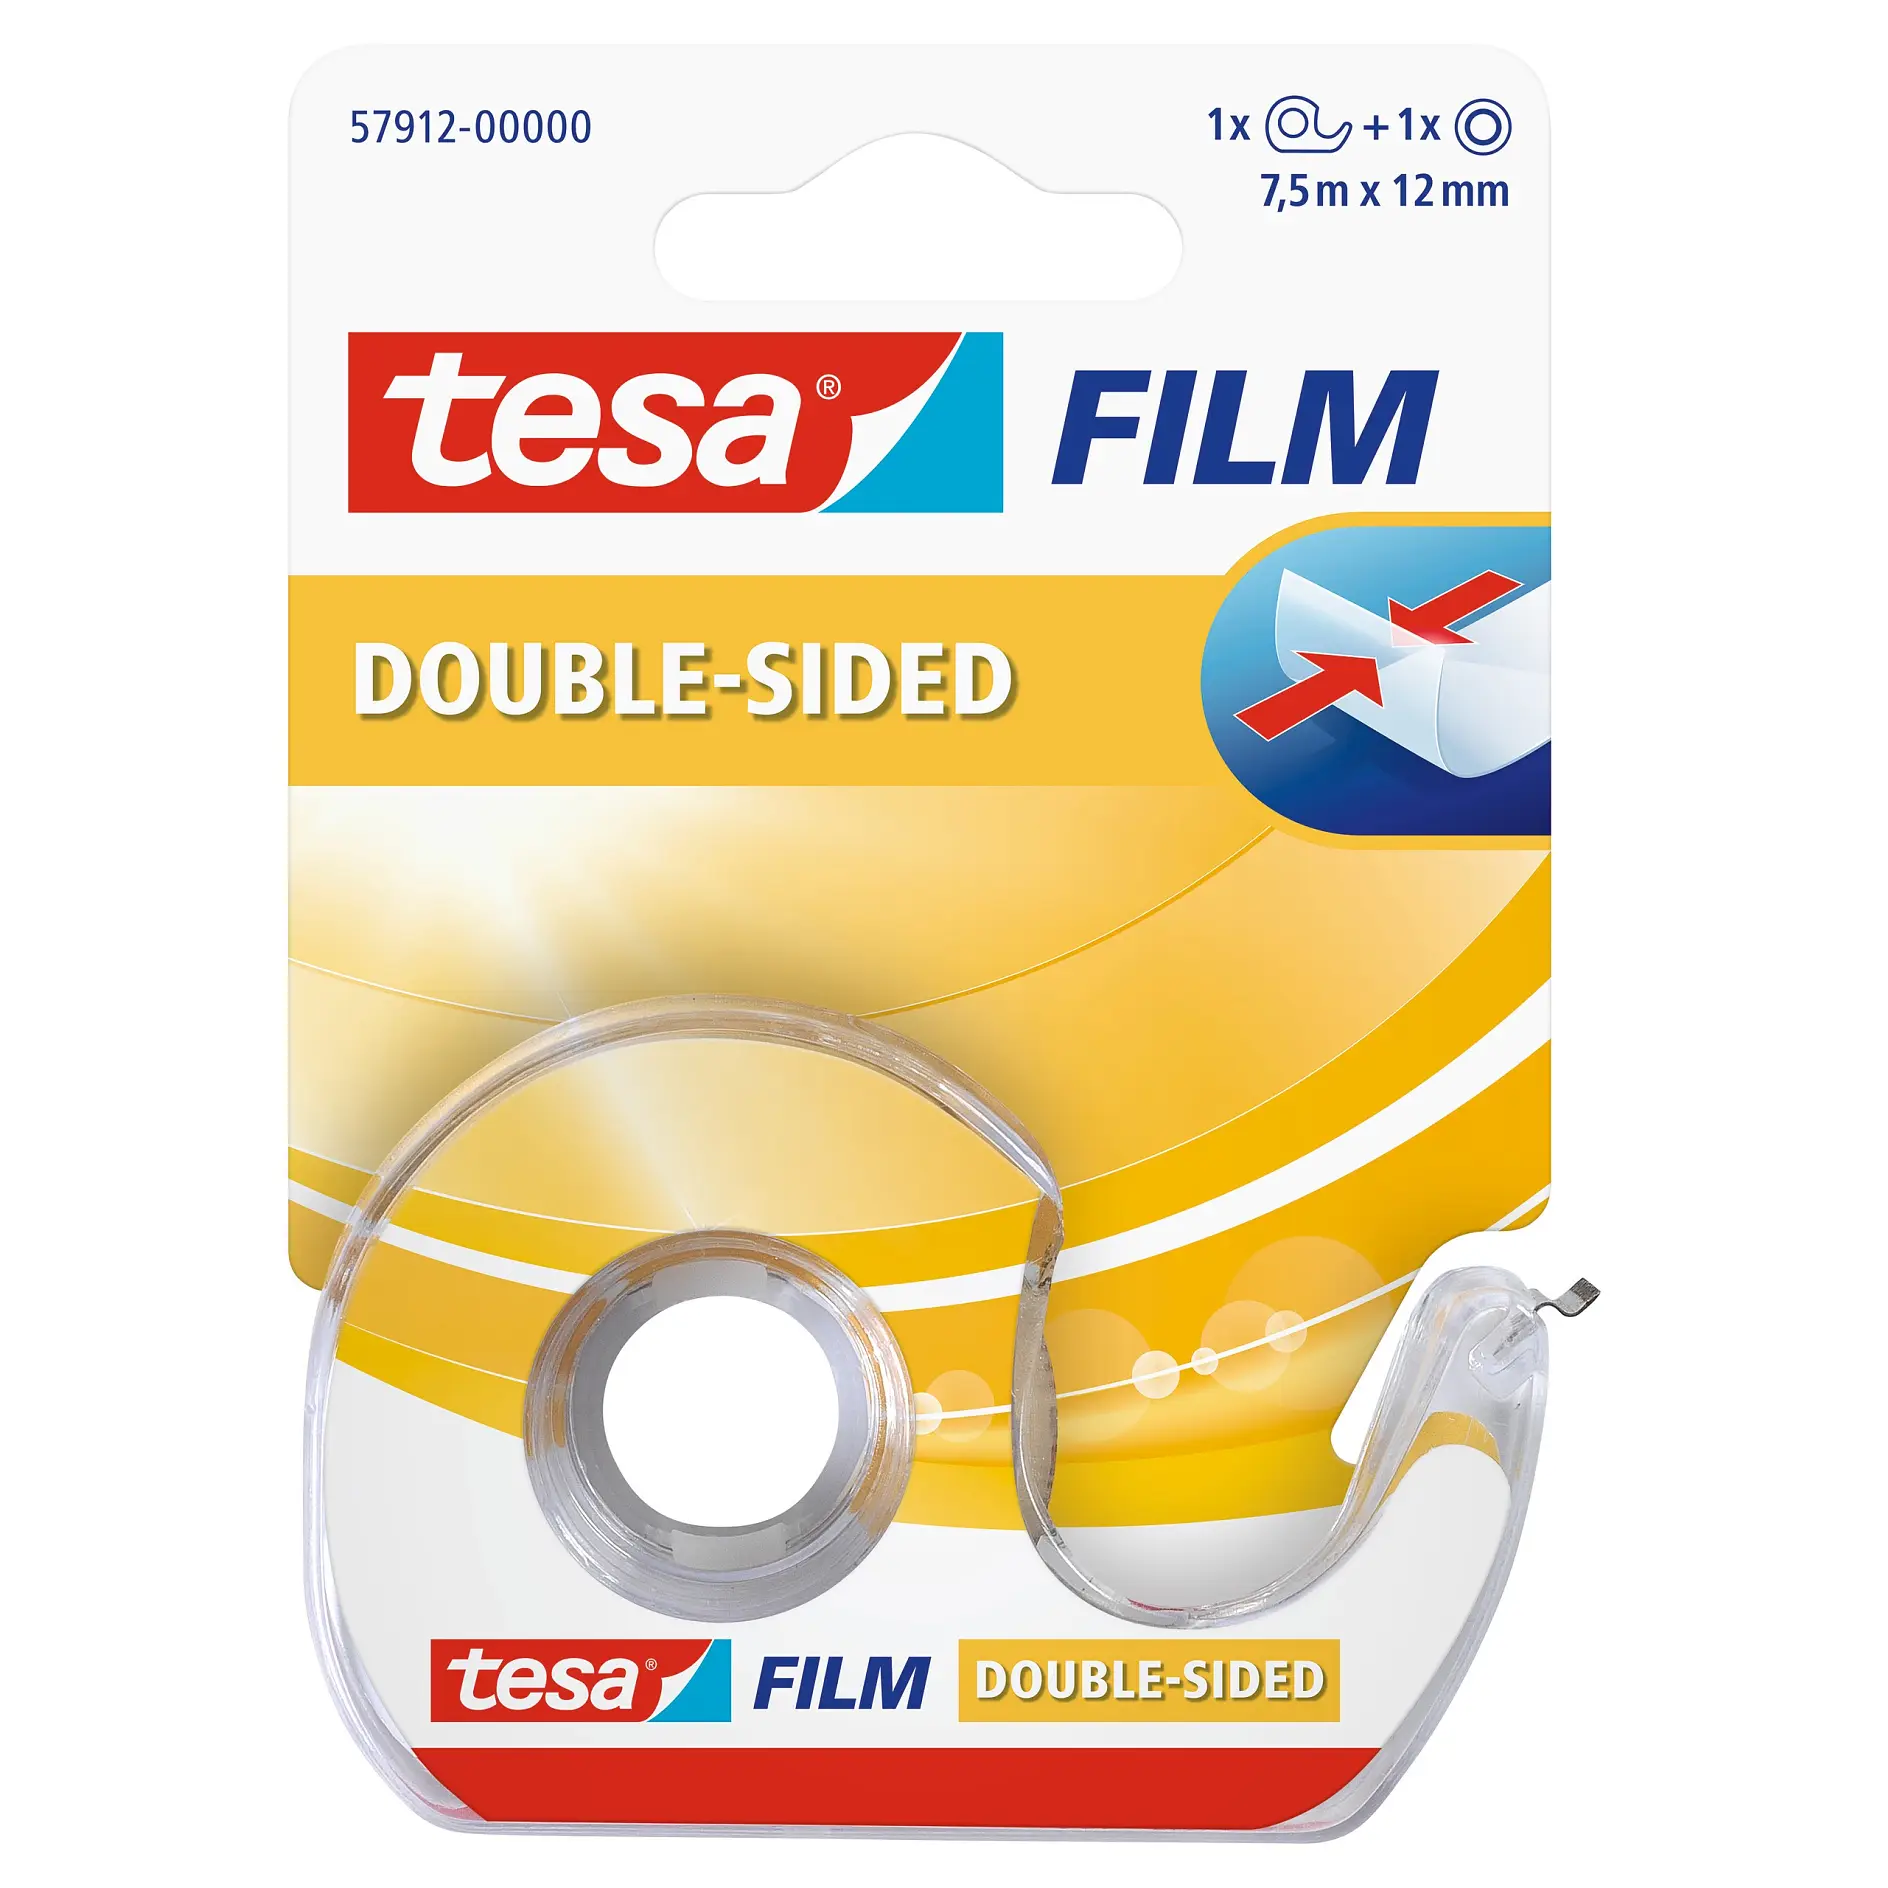 [en-en] 1 x tesafilm Double-Sided 7,5m x 12mm + Disposable Dispenser, Hanging Card